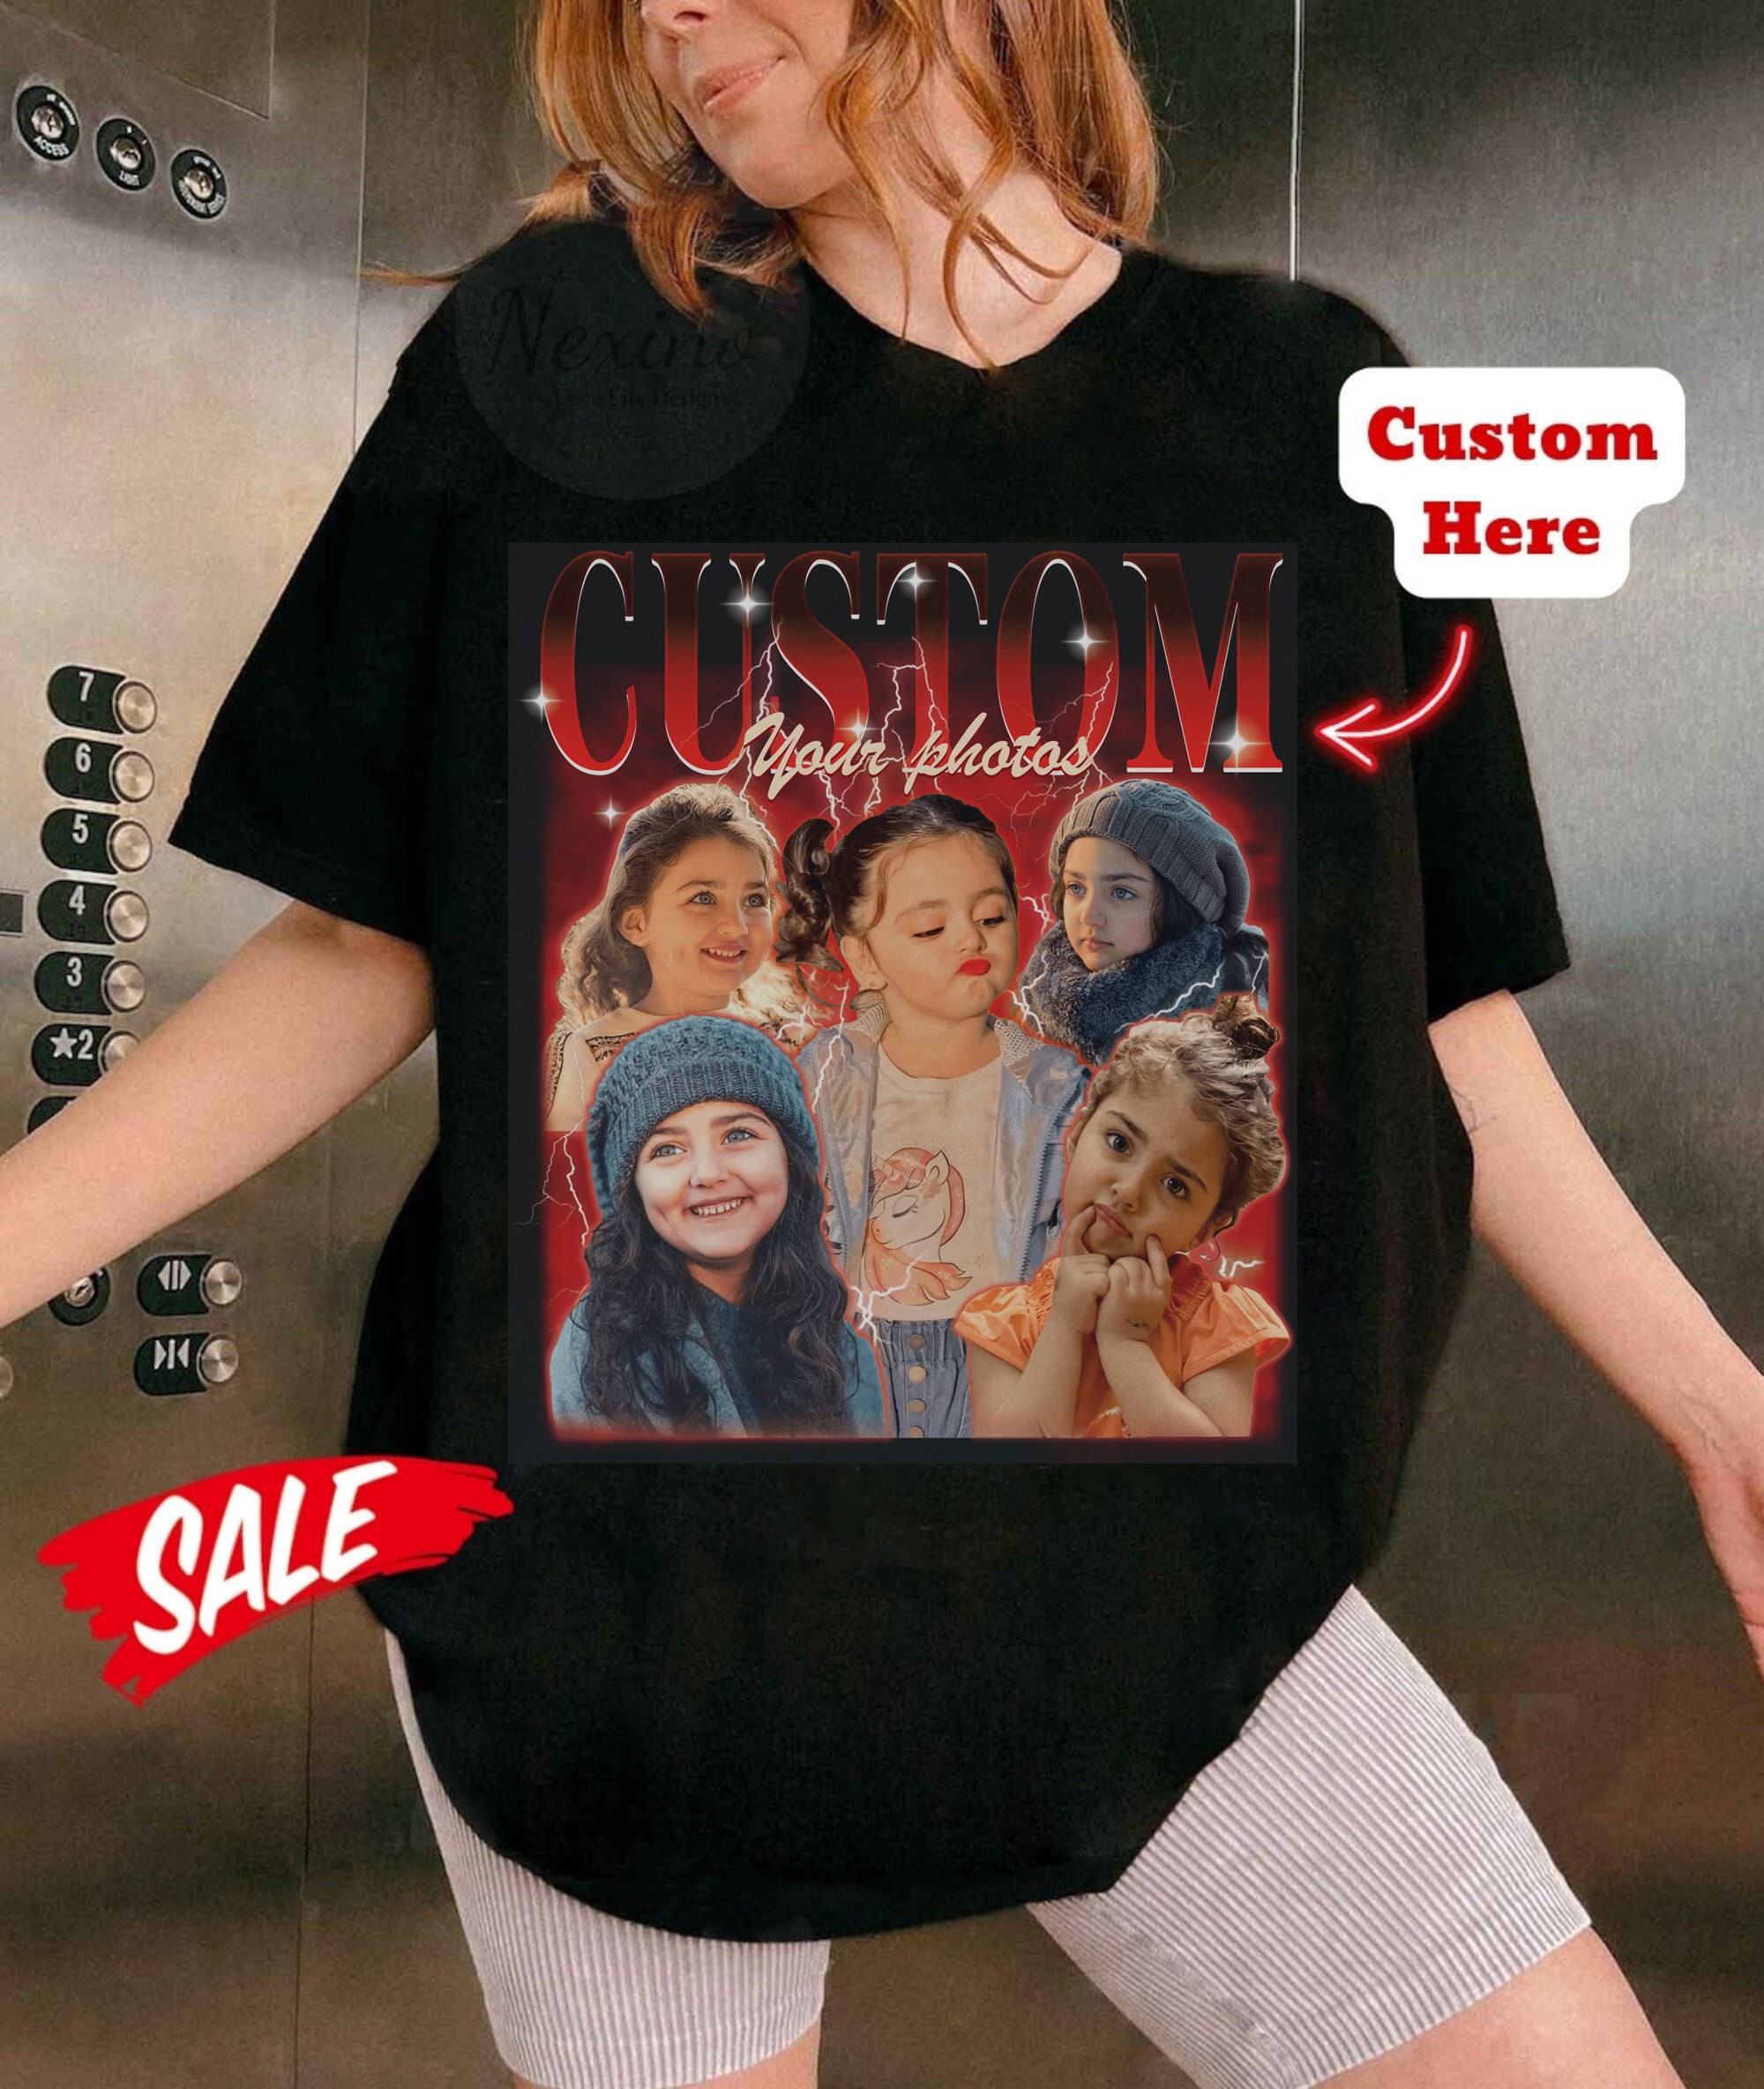 Retro Baby Bootleg Custom Shirt, Custom Photo - Vintage Graphic 90s T-shirt